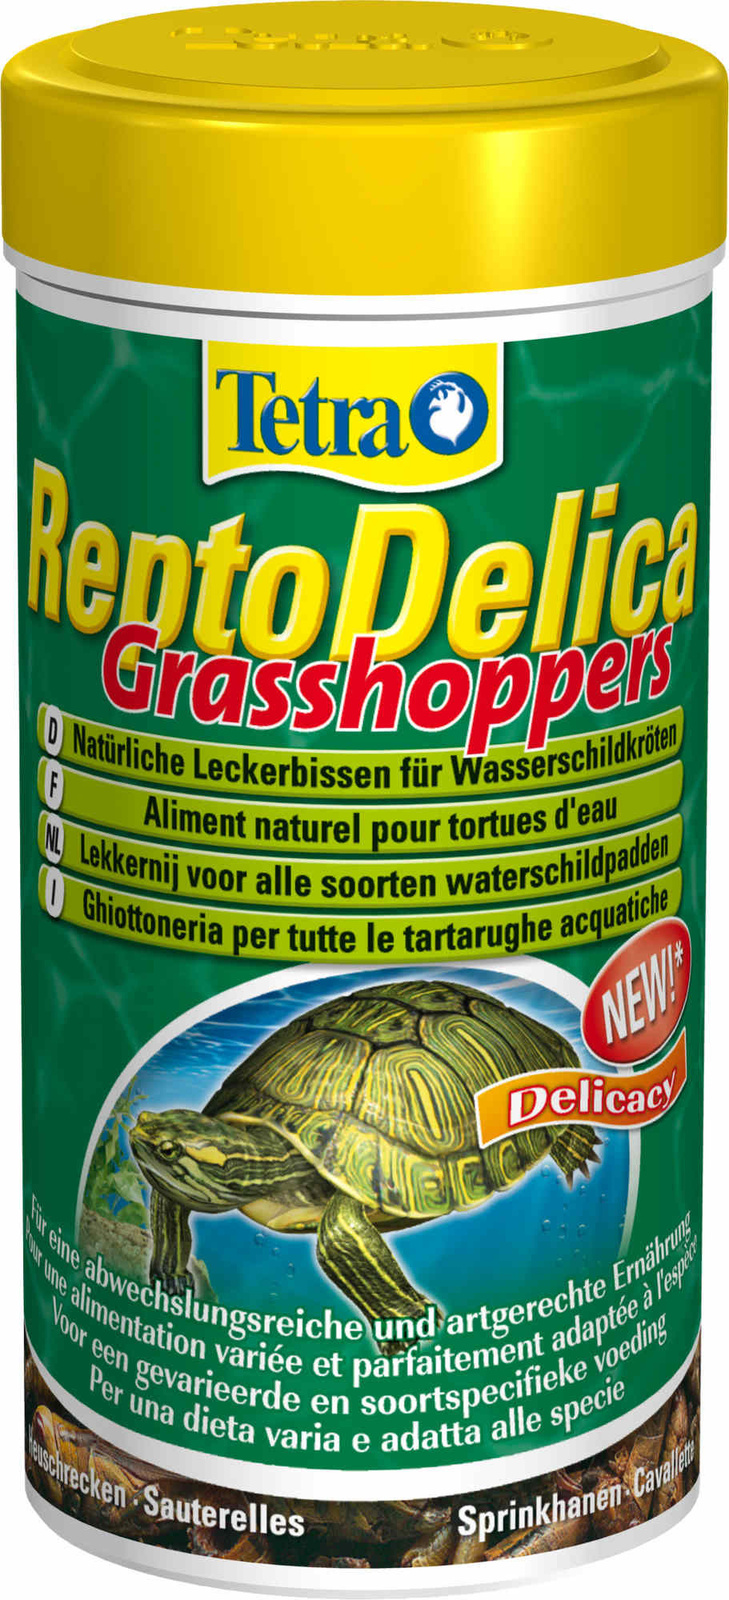 Tetra (корма) Tetra (корма) натуральное лакомство для водных черепах: кузнечики (28 г) лакомство tetra reptodelica grasshoppers для водных черепах кузнечики 250 мл